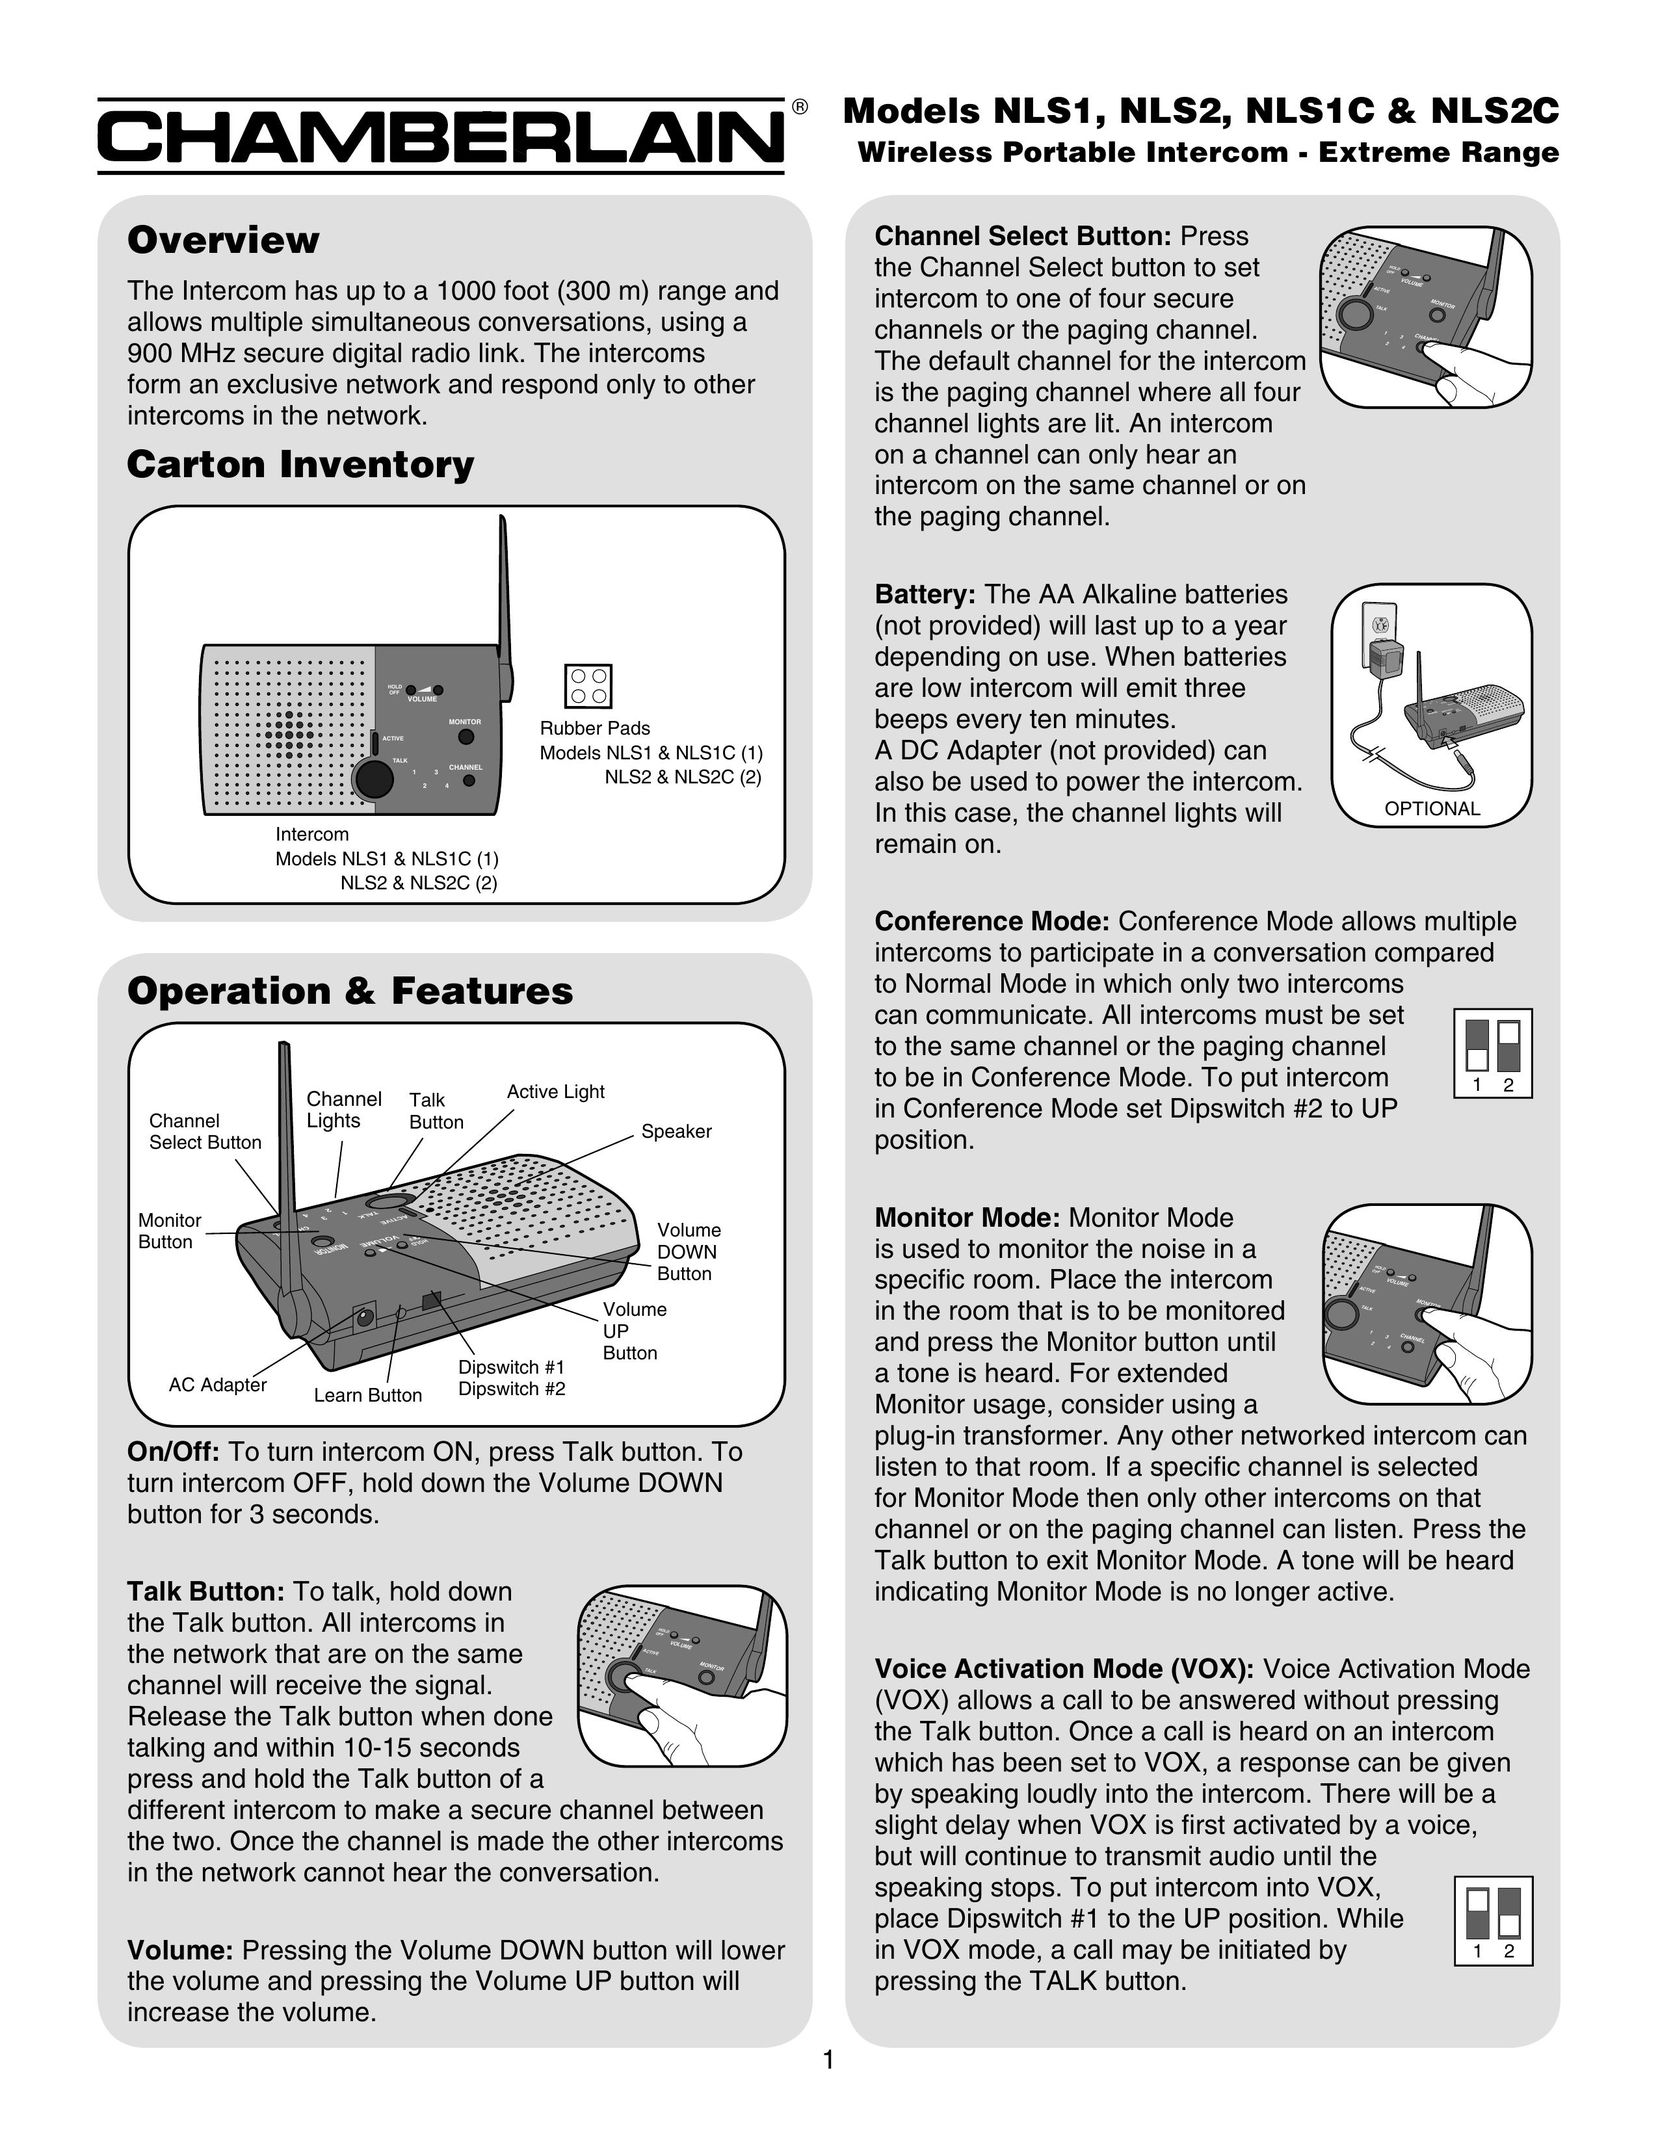 Chamberlain NLS2 Intercom System User Manual